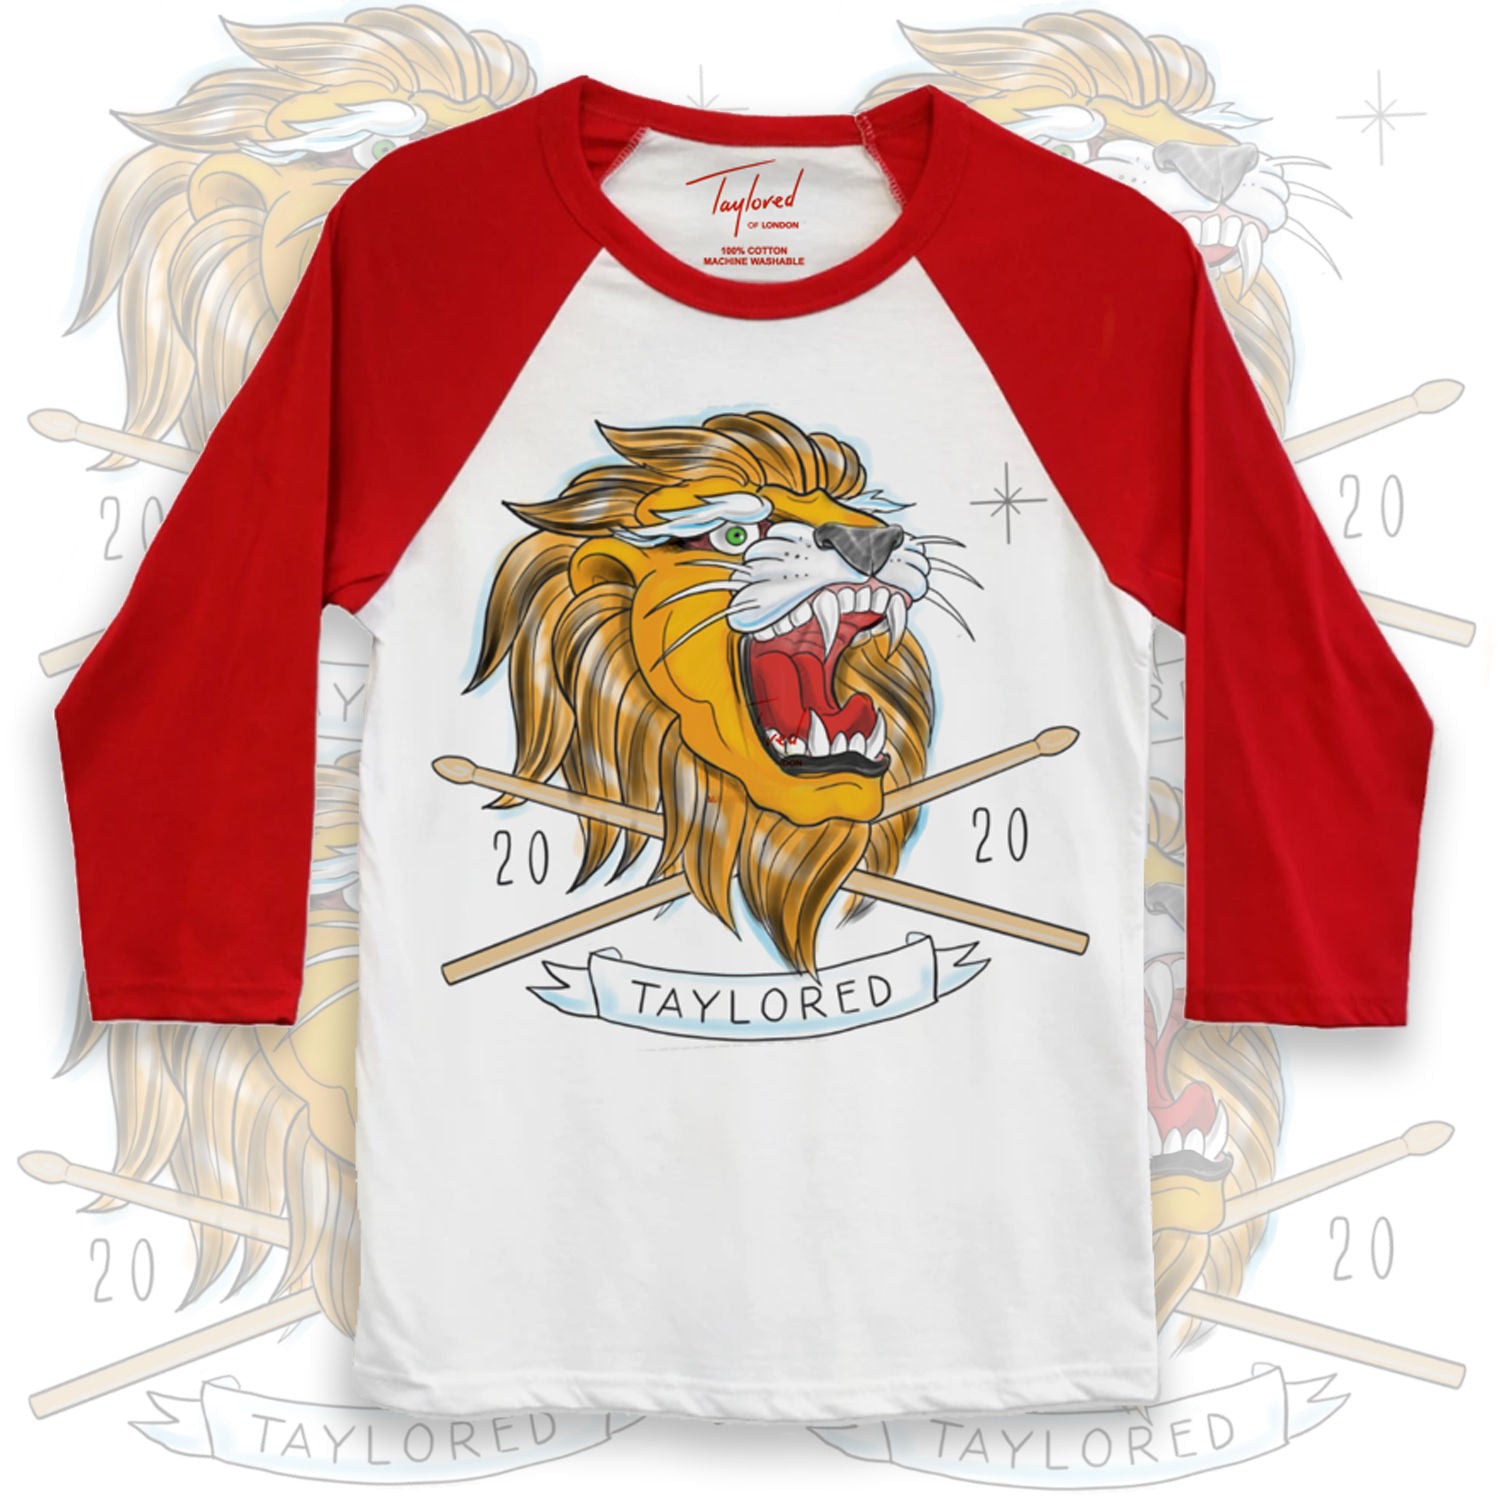 Roger Taylor - 'Taylored' 2020 Lion Red Baseball Shirt 